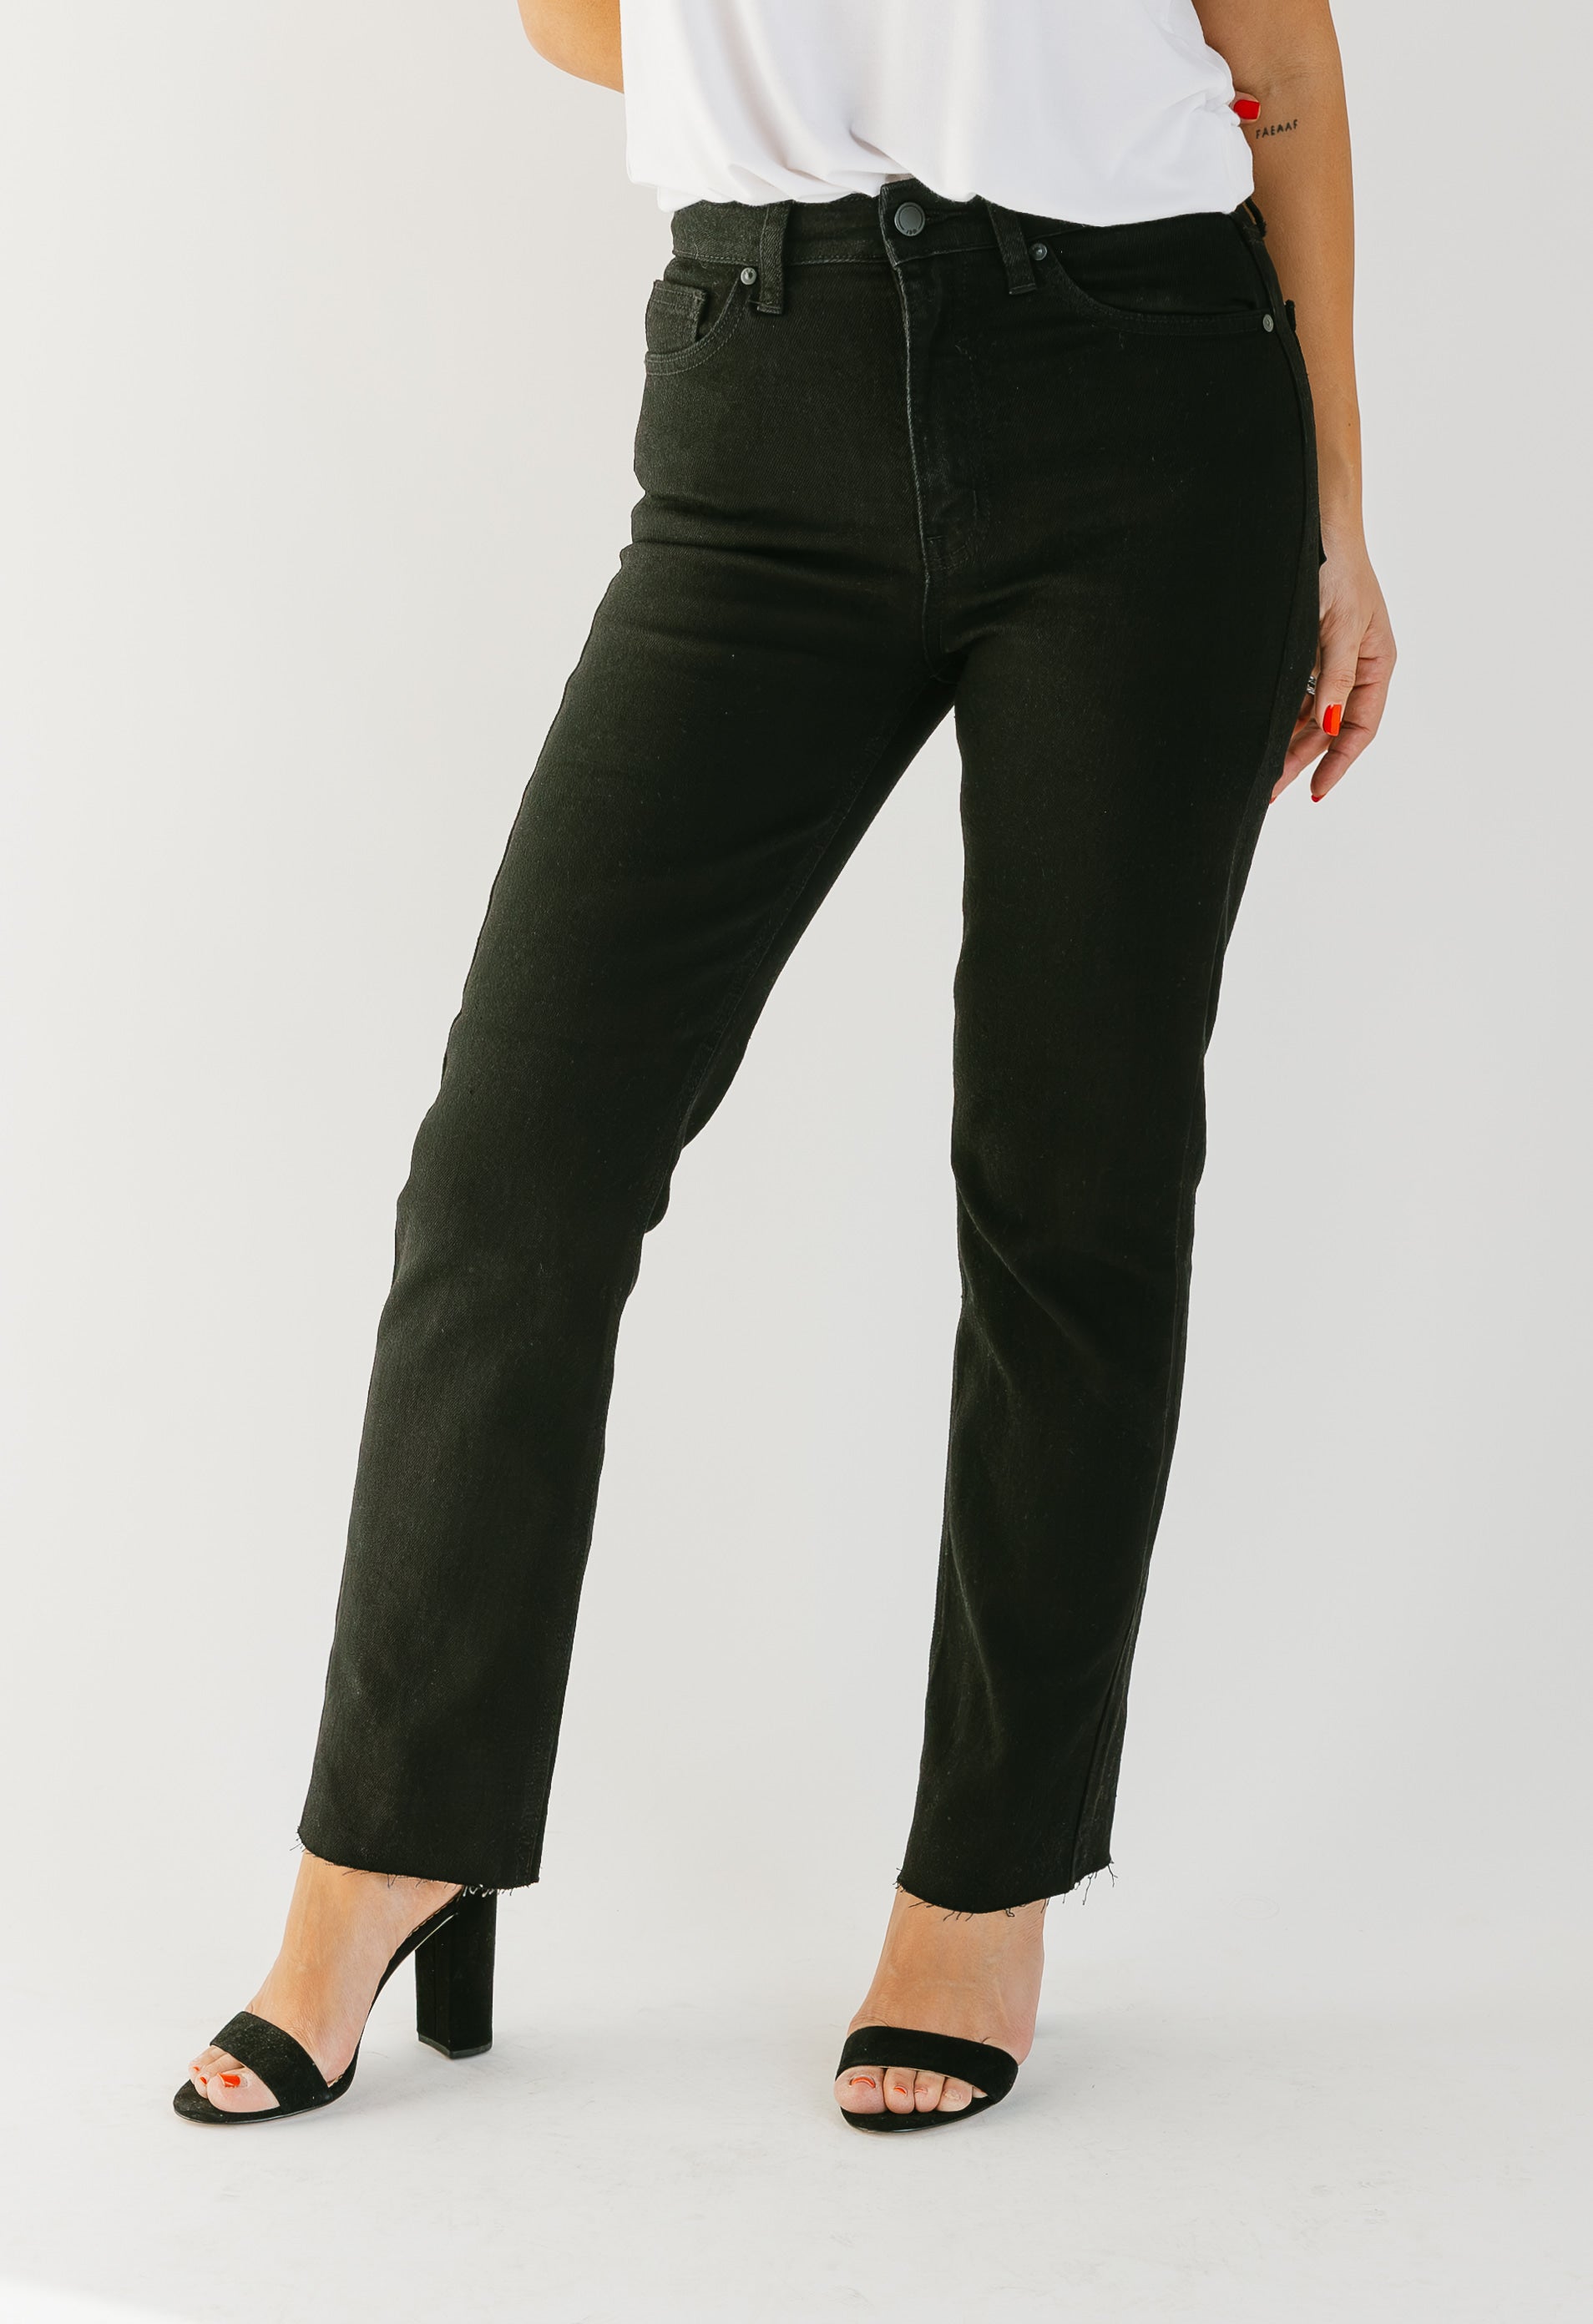 Paloma Jeans - BLACK - willows clothing Straight Leg